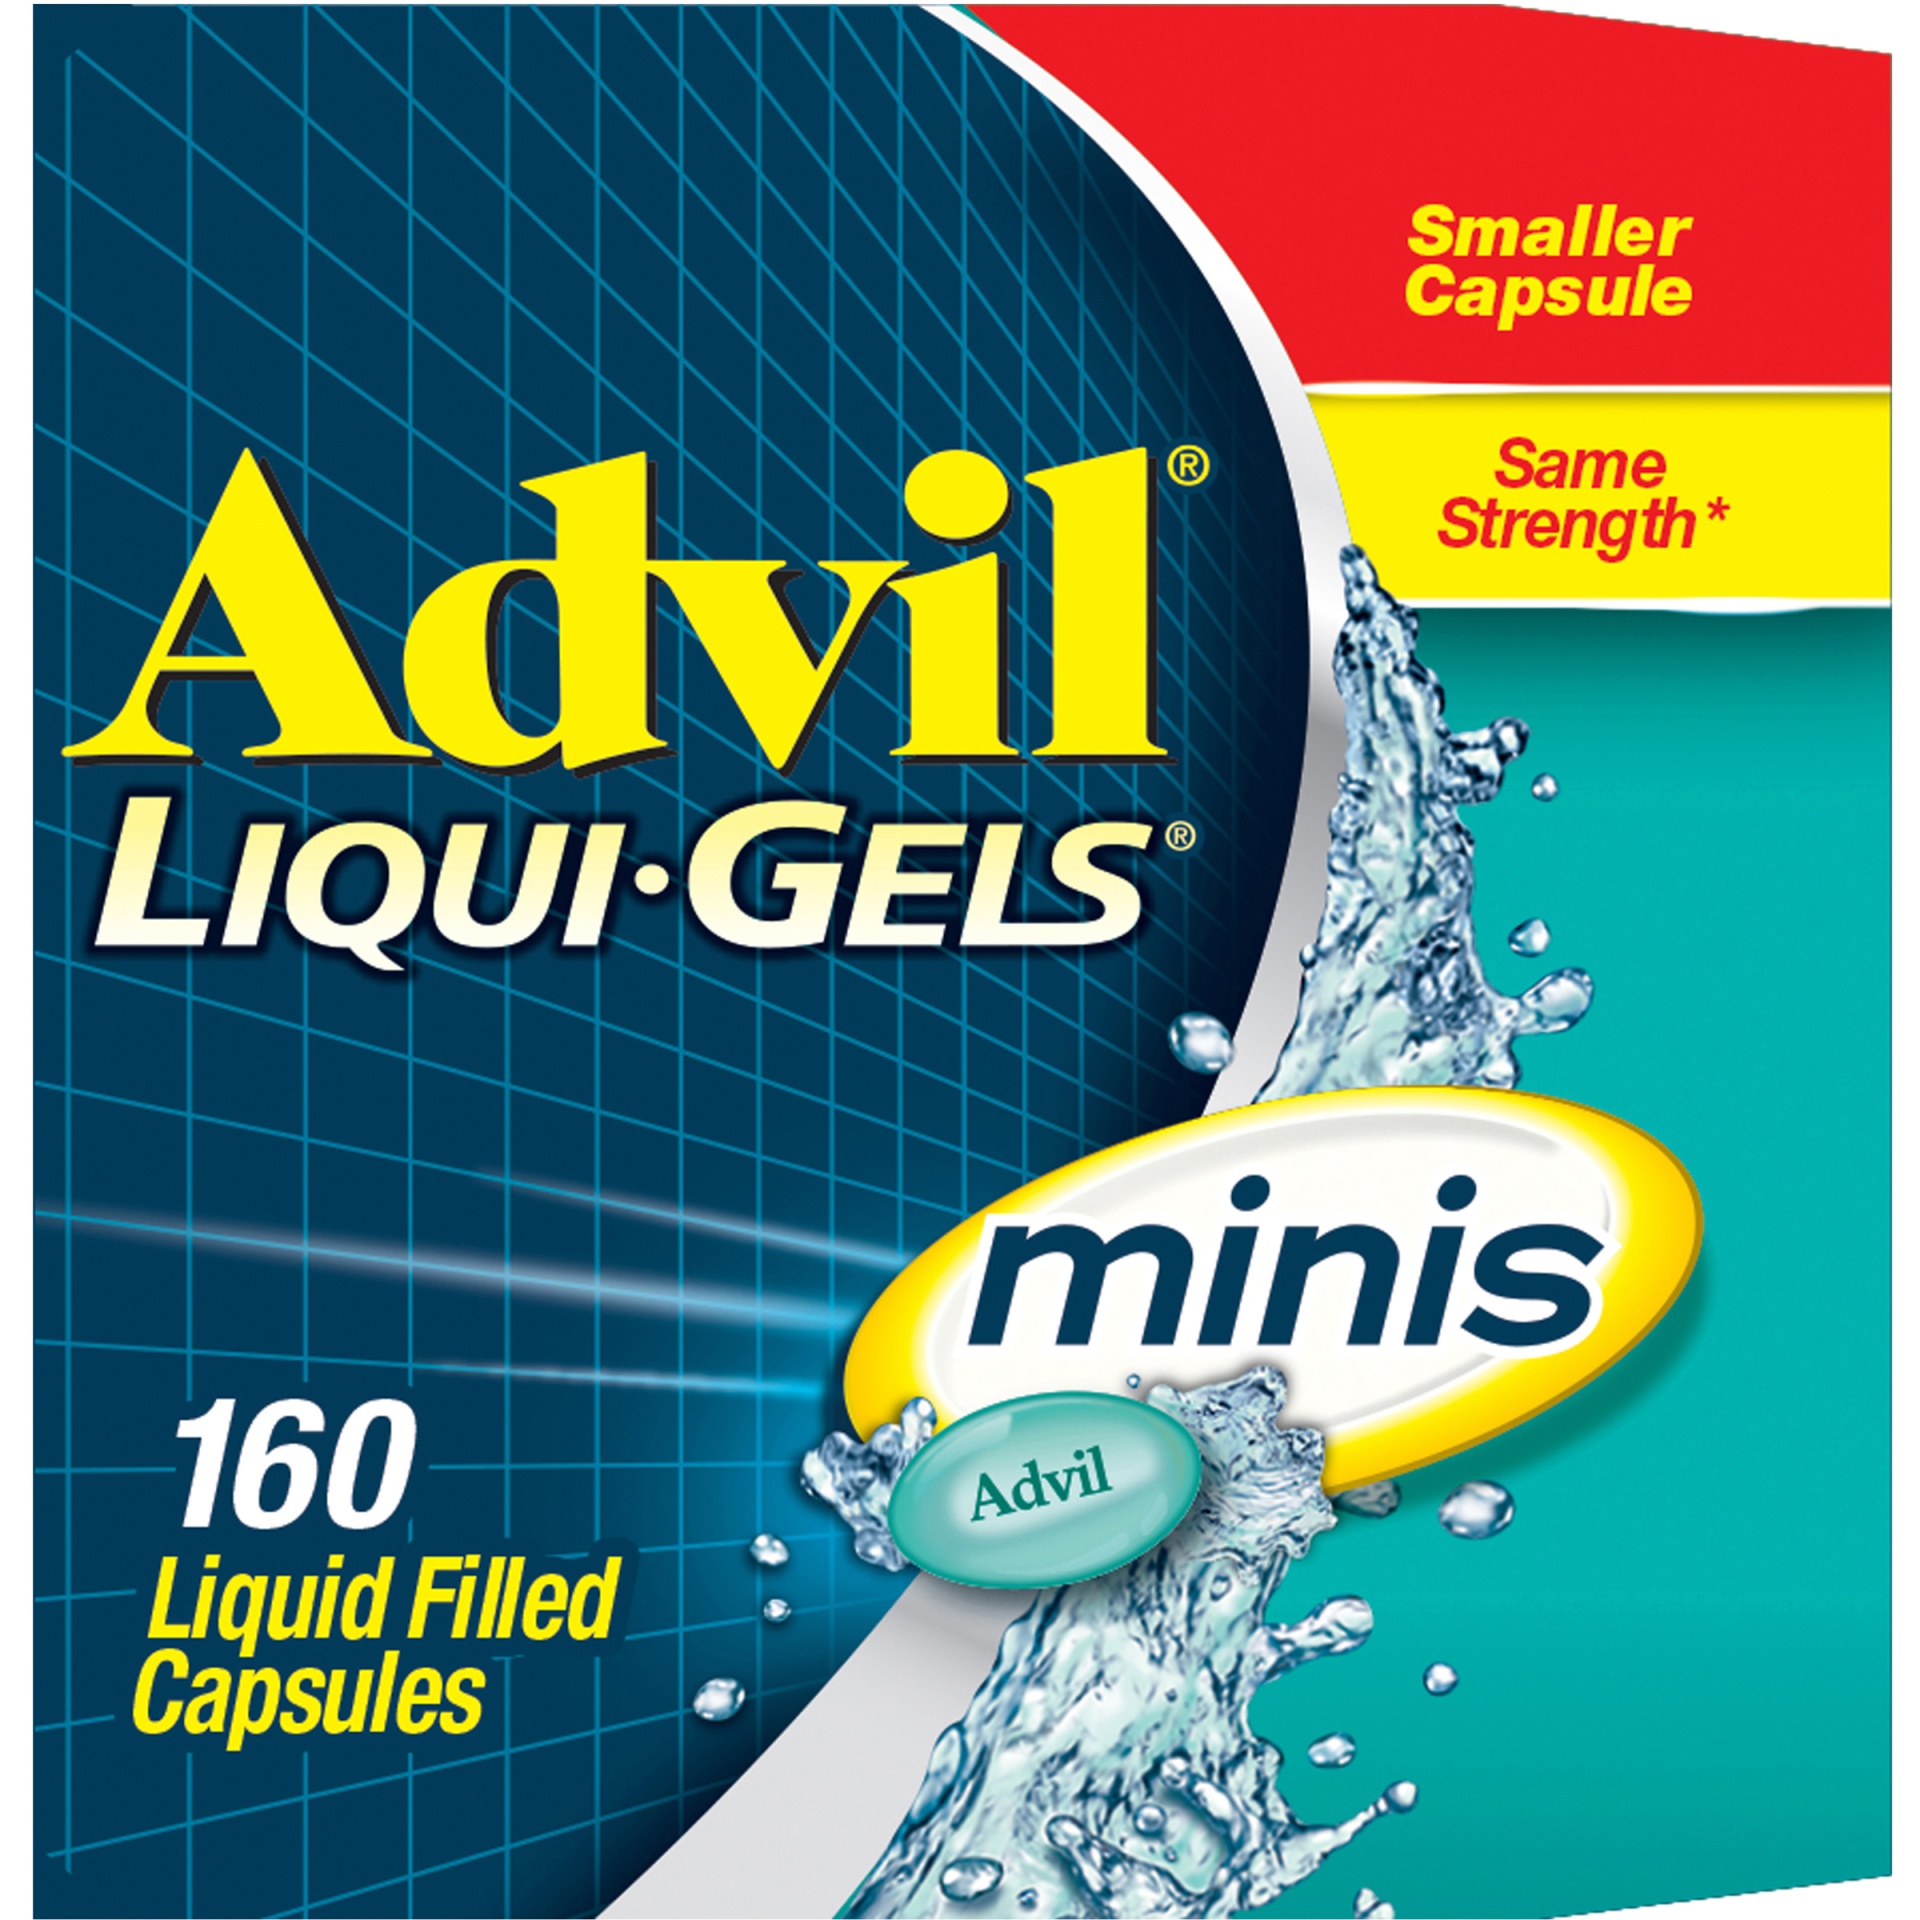 advil liquid gel minis